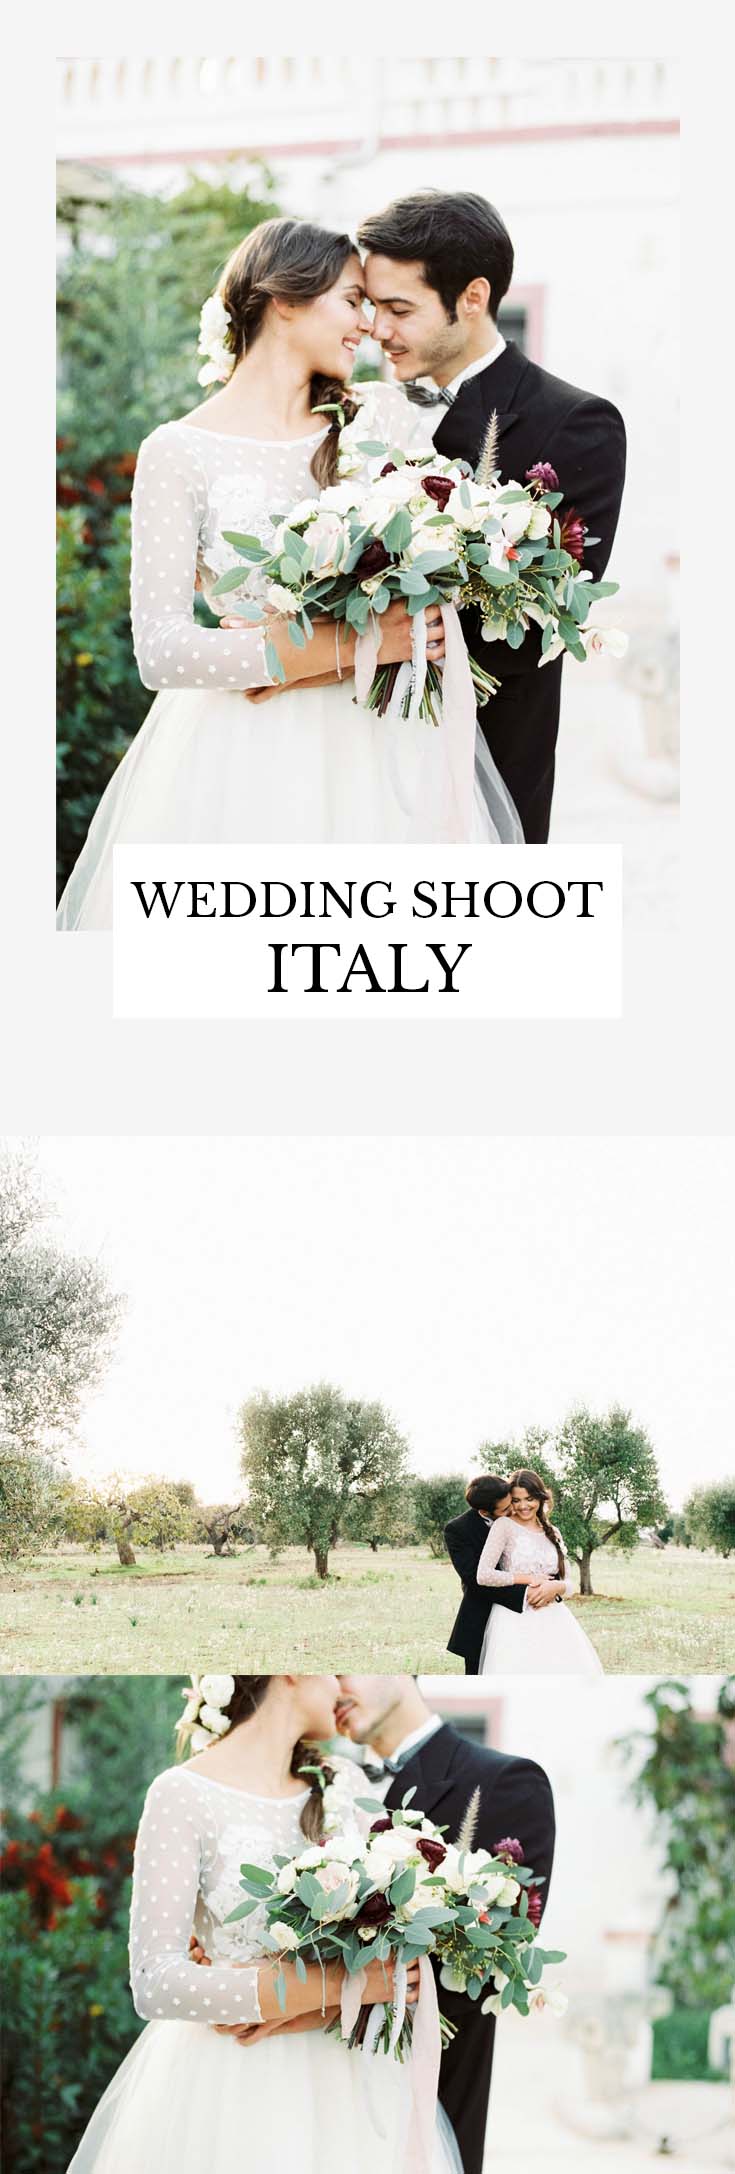 Wedding shoot Italy